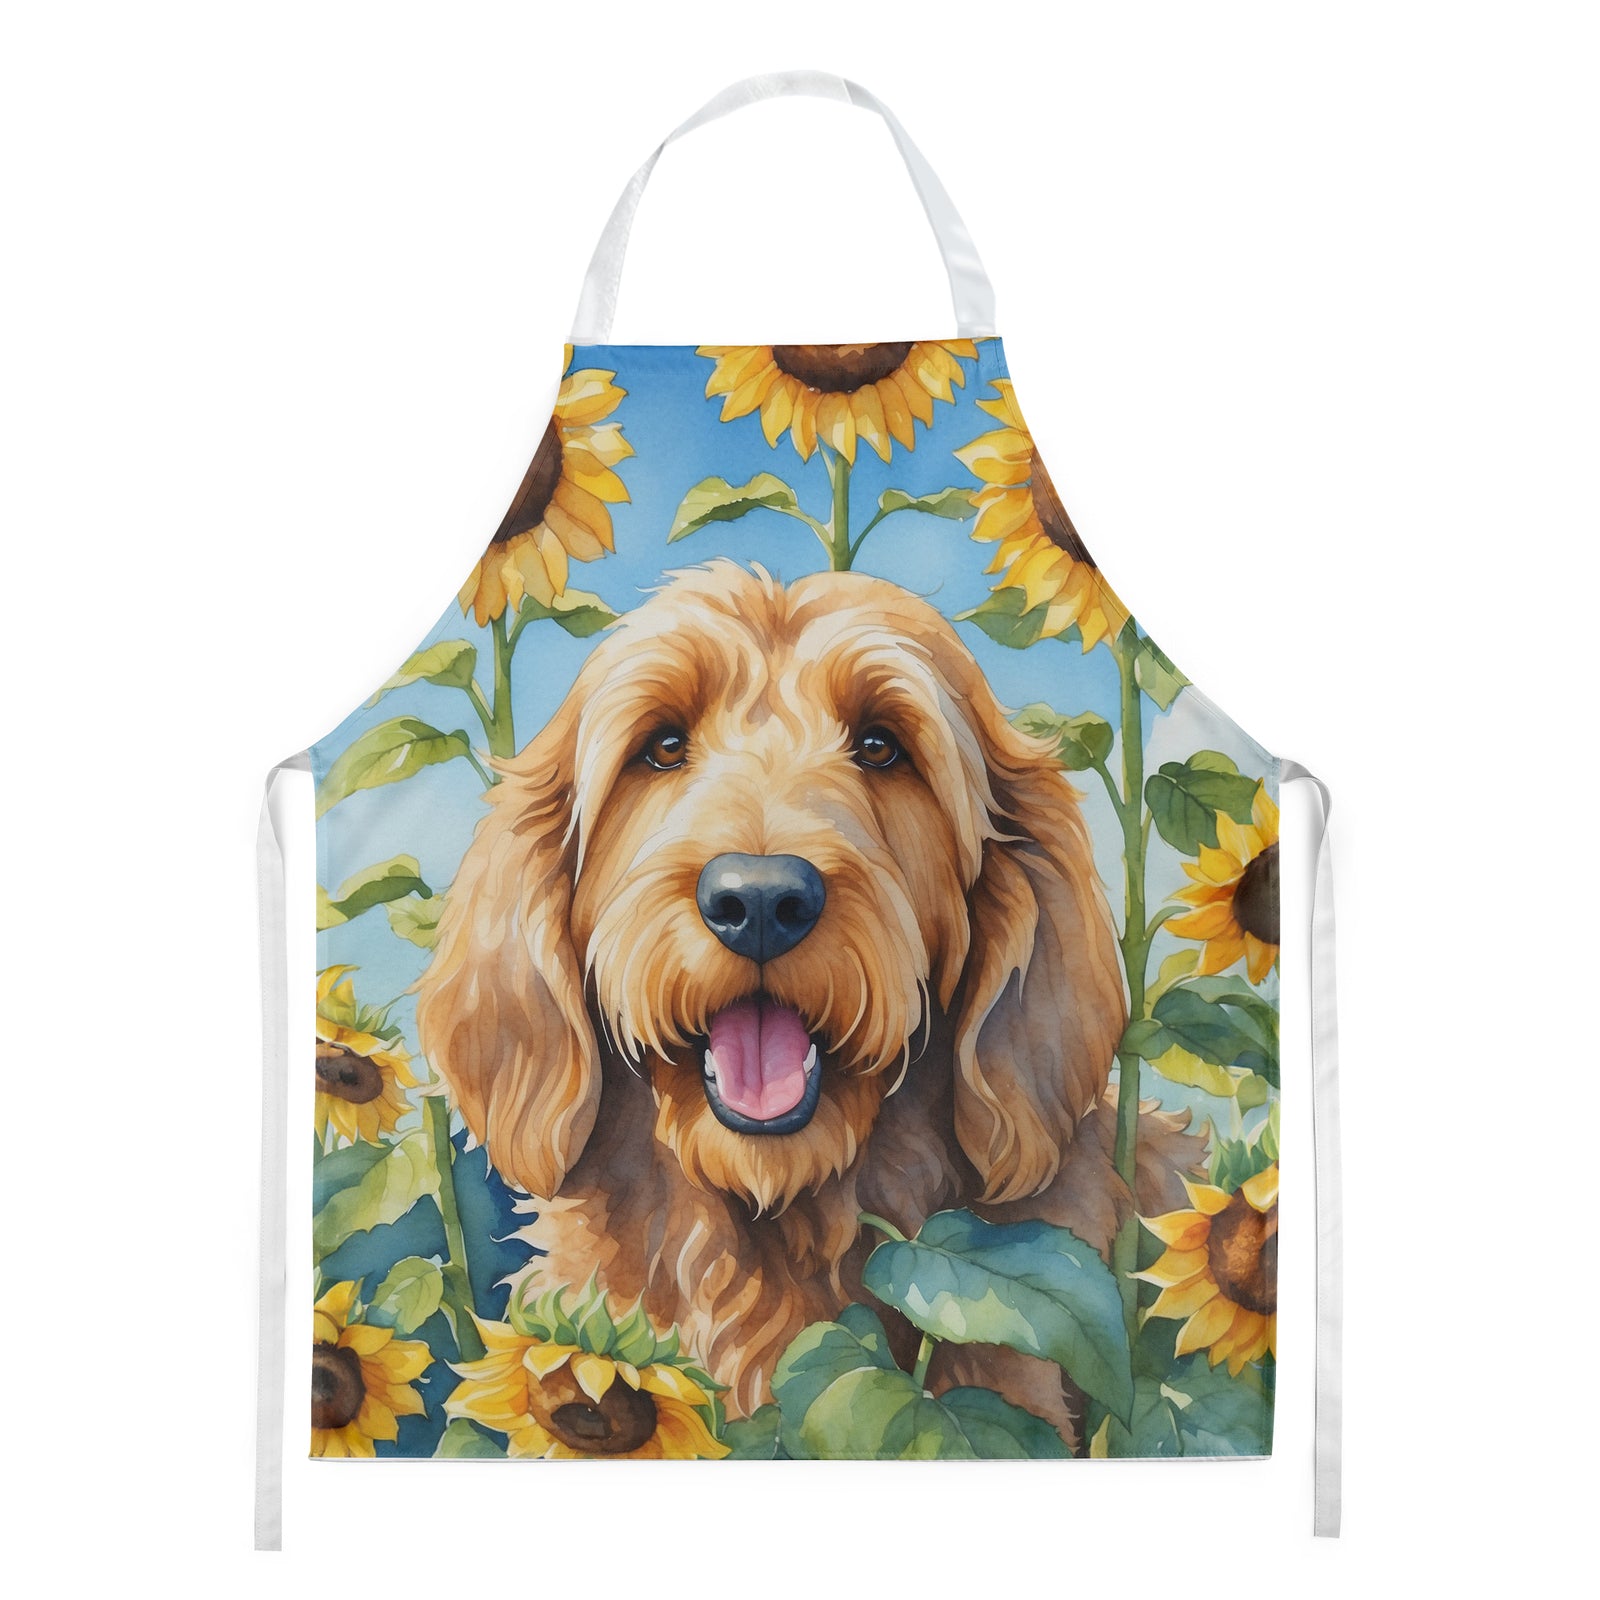 Buy this Otterhound in Sunflowers Apron